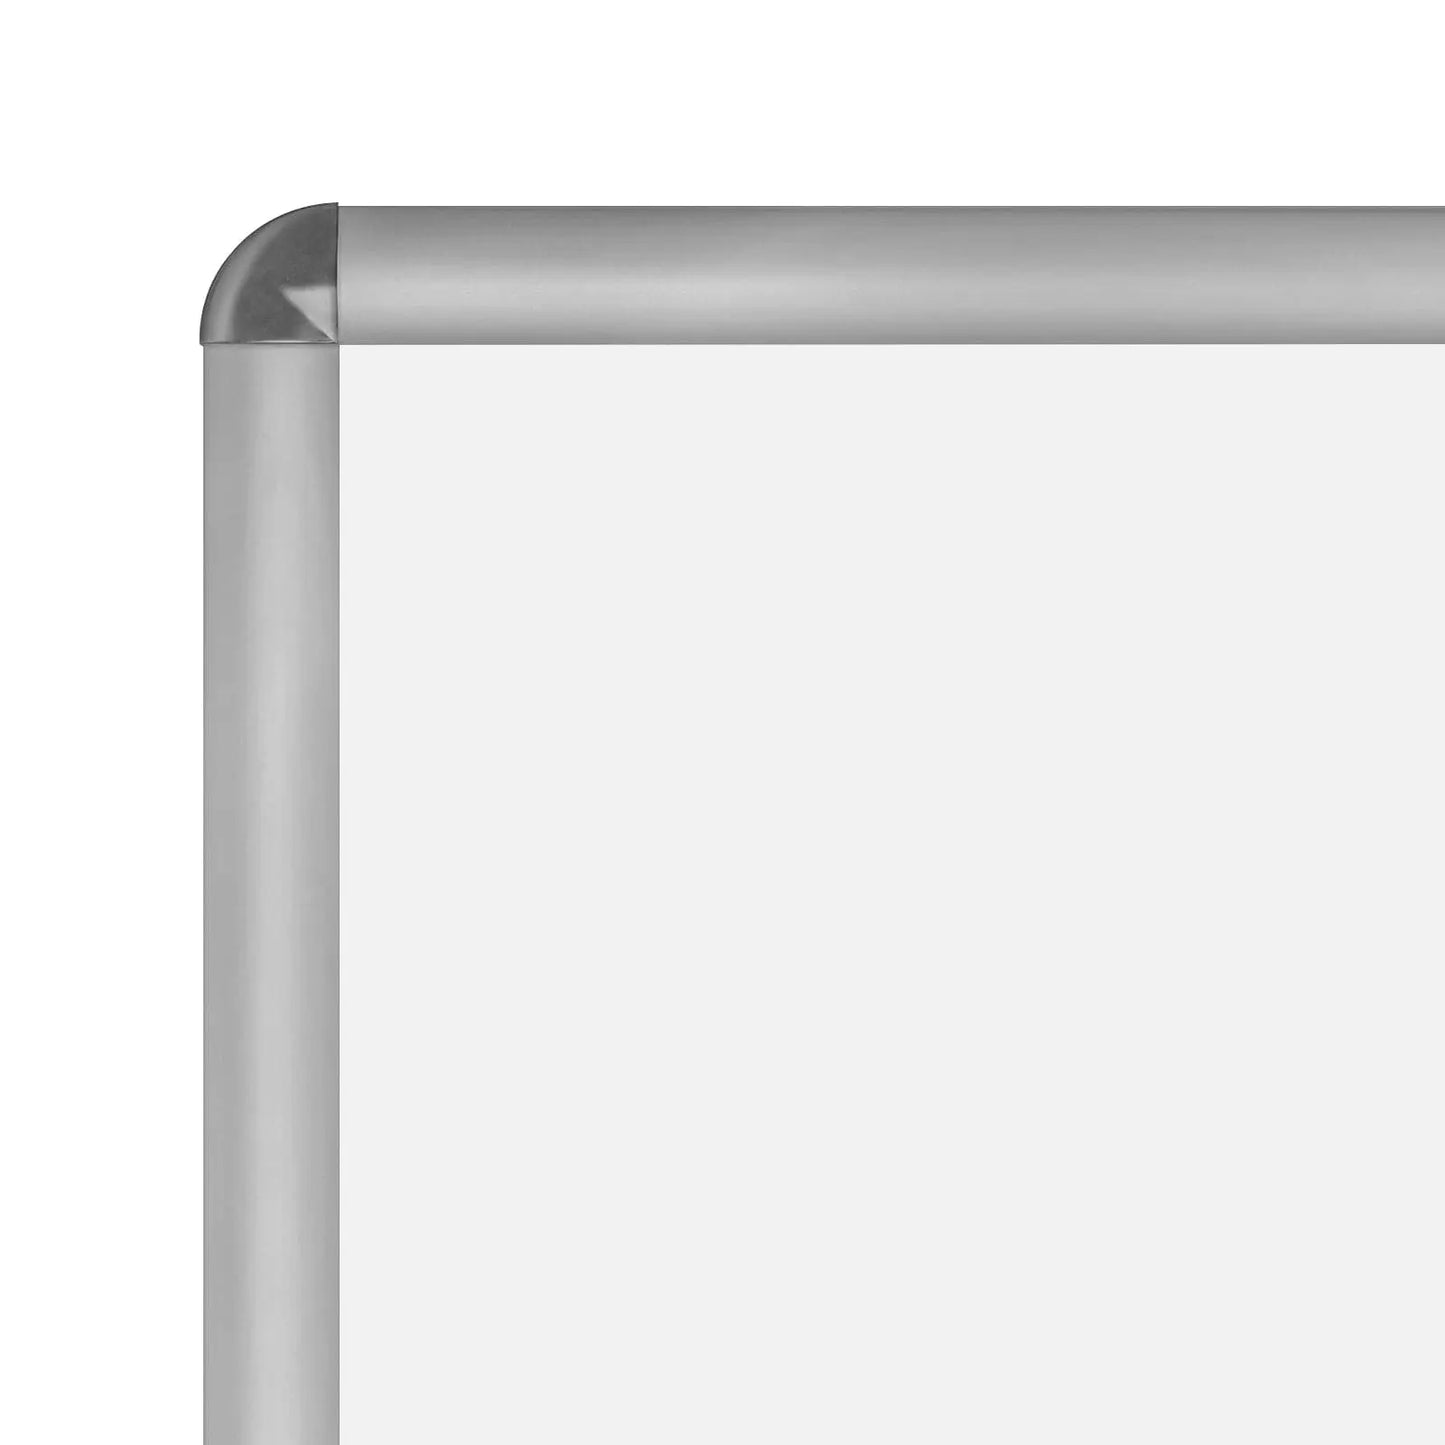 36x48 Silver SnapeZo® Round-Cornered - 1.25" Profile - Snap Frames Direct